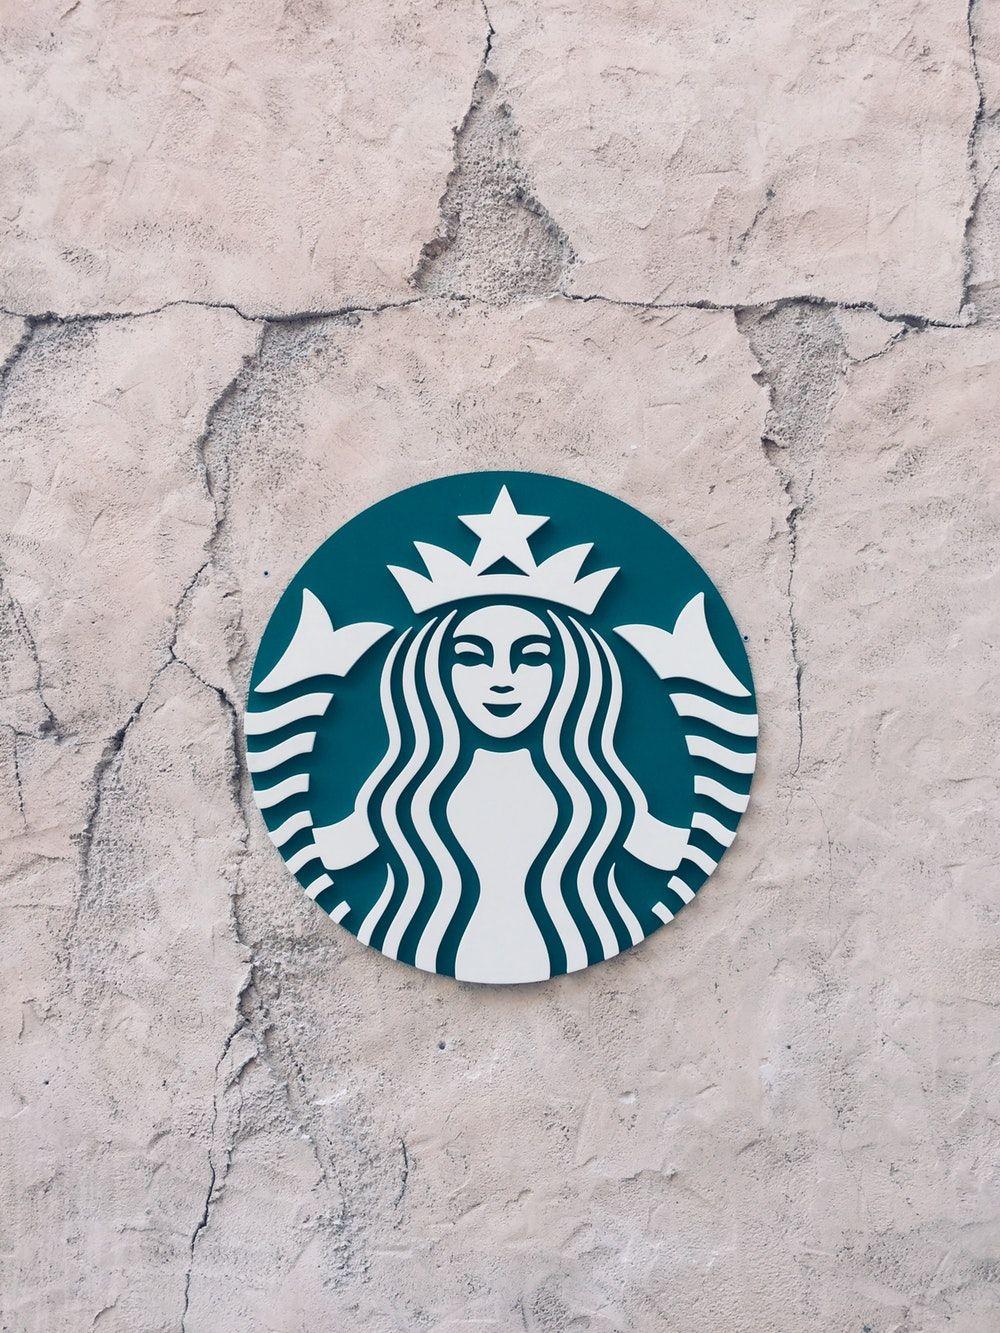 Blue Starbucks Logo - Starbucks Logo Pictures | Download Free Images on Unsplash